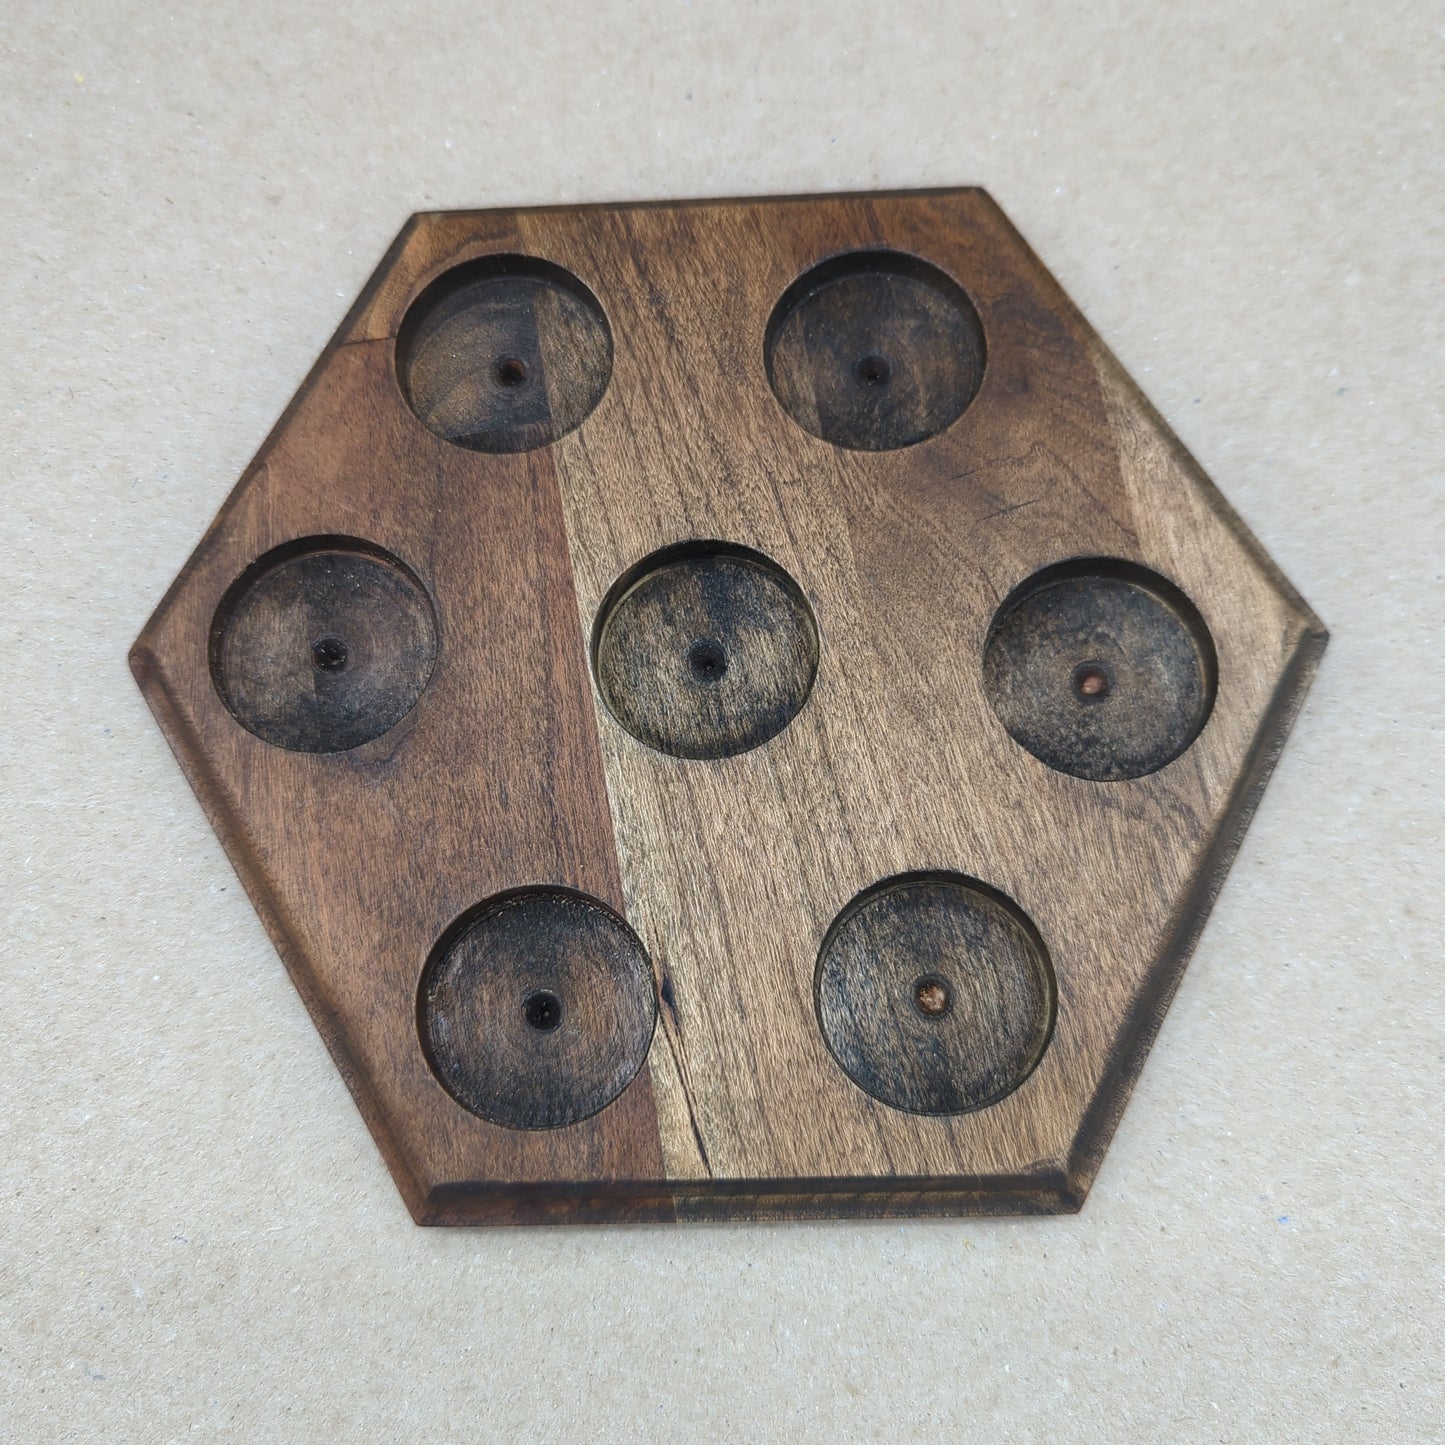 Espresso Hexagon Display Altar | Wooden Essential Oil Display Block | Hand Crafted Wooden Altar